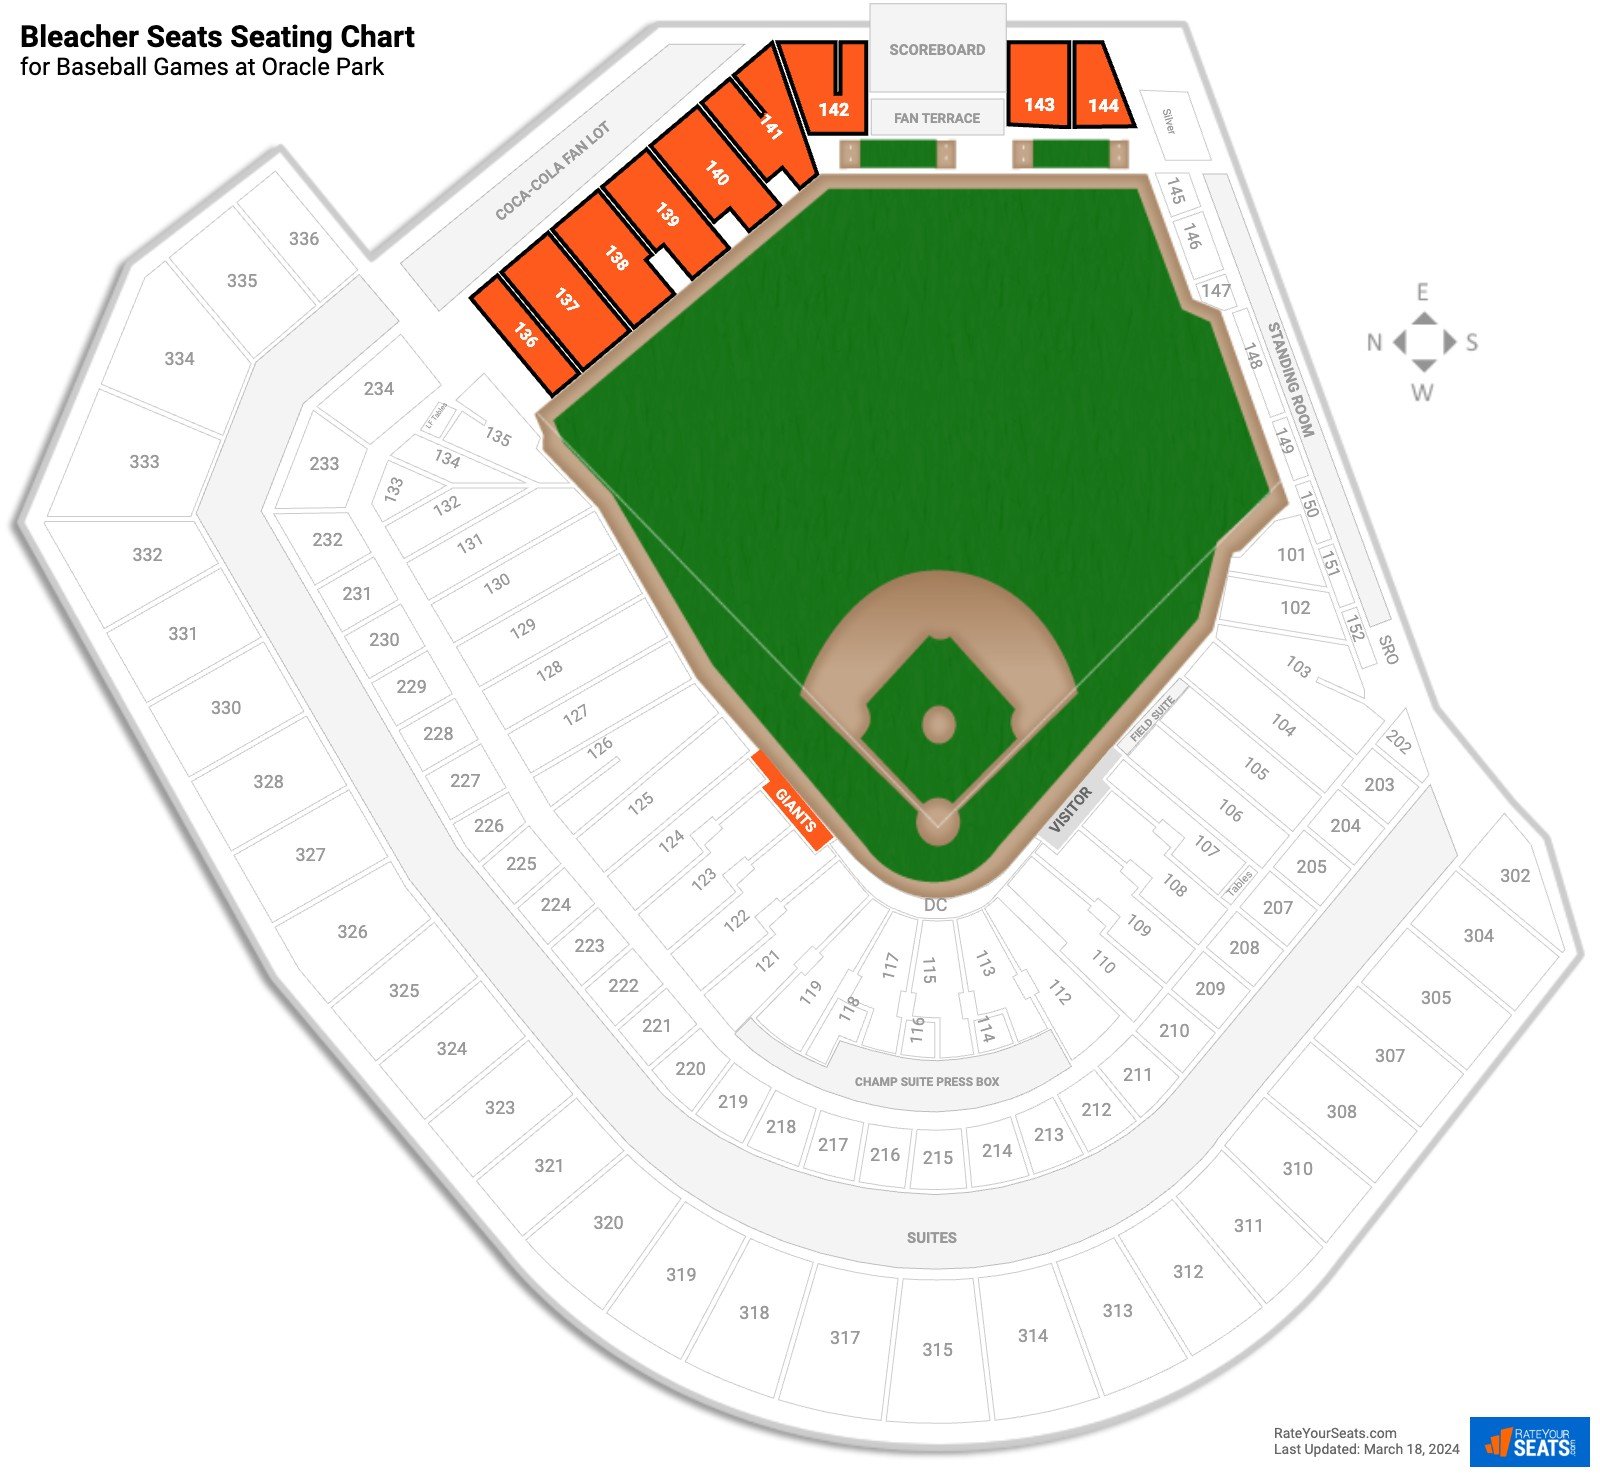 Baseball Bleacher Seats Seating Chart at Oracle Park